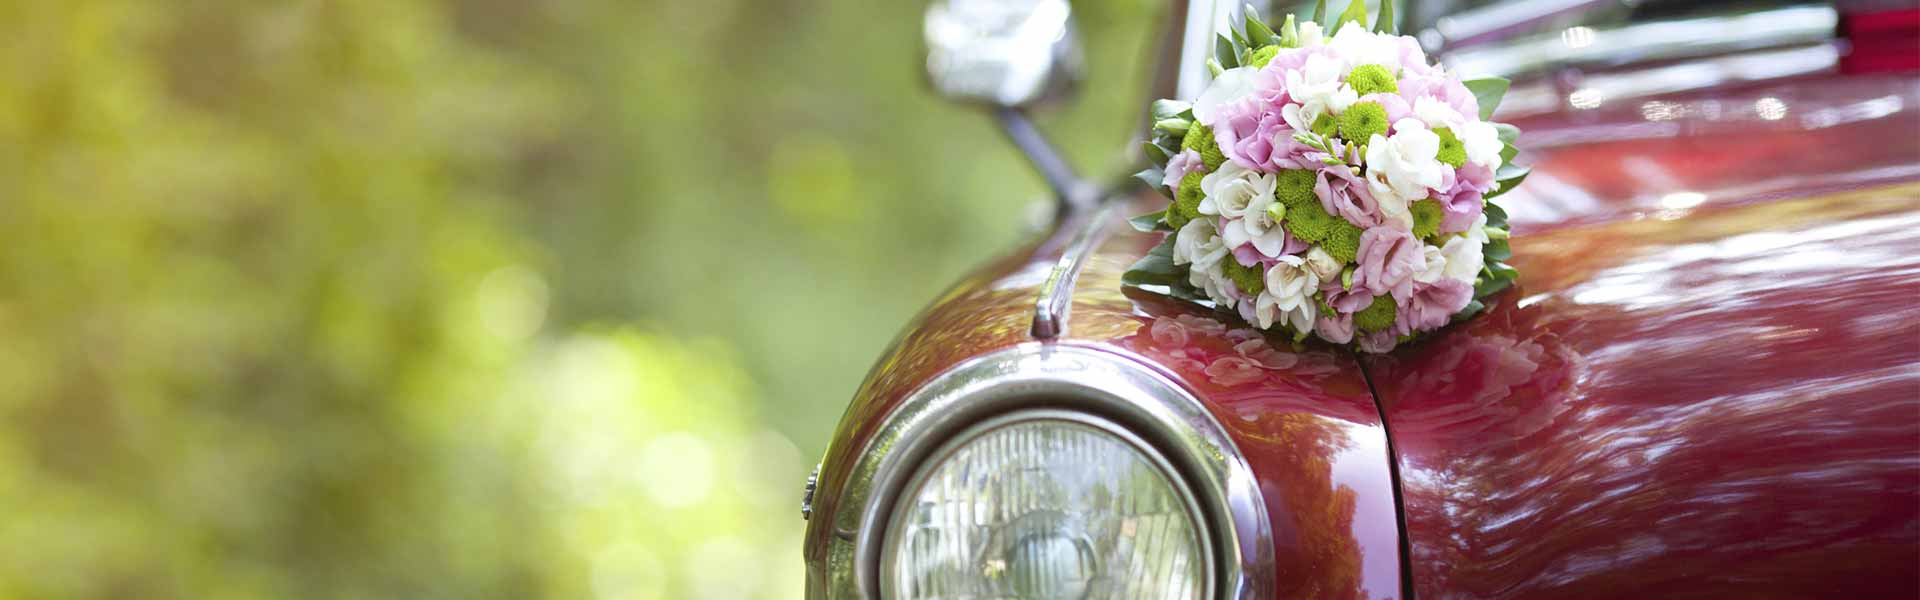 Rent-a-car-for-a-wedding